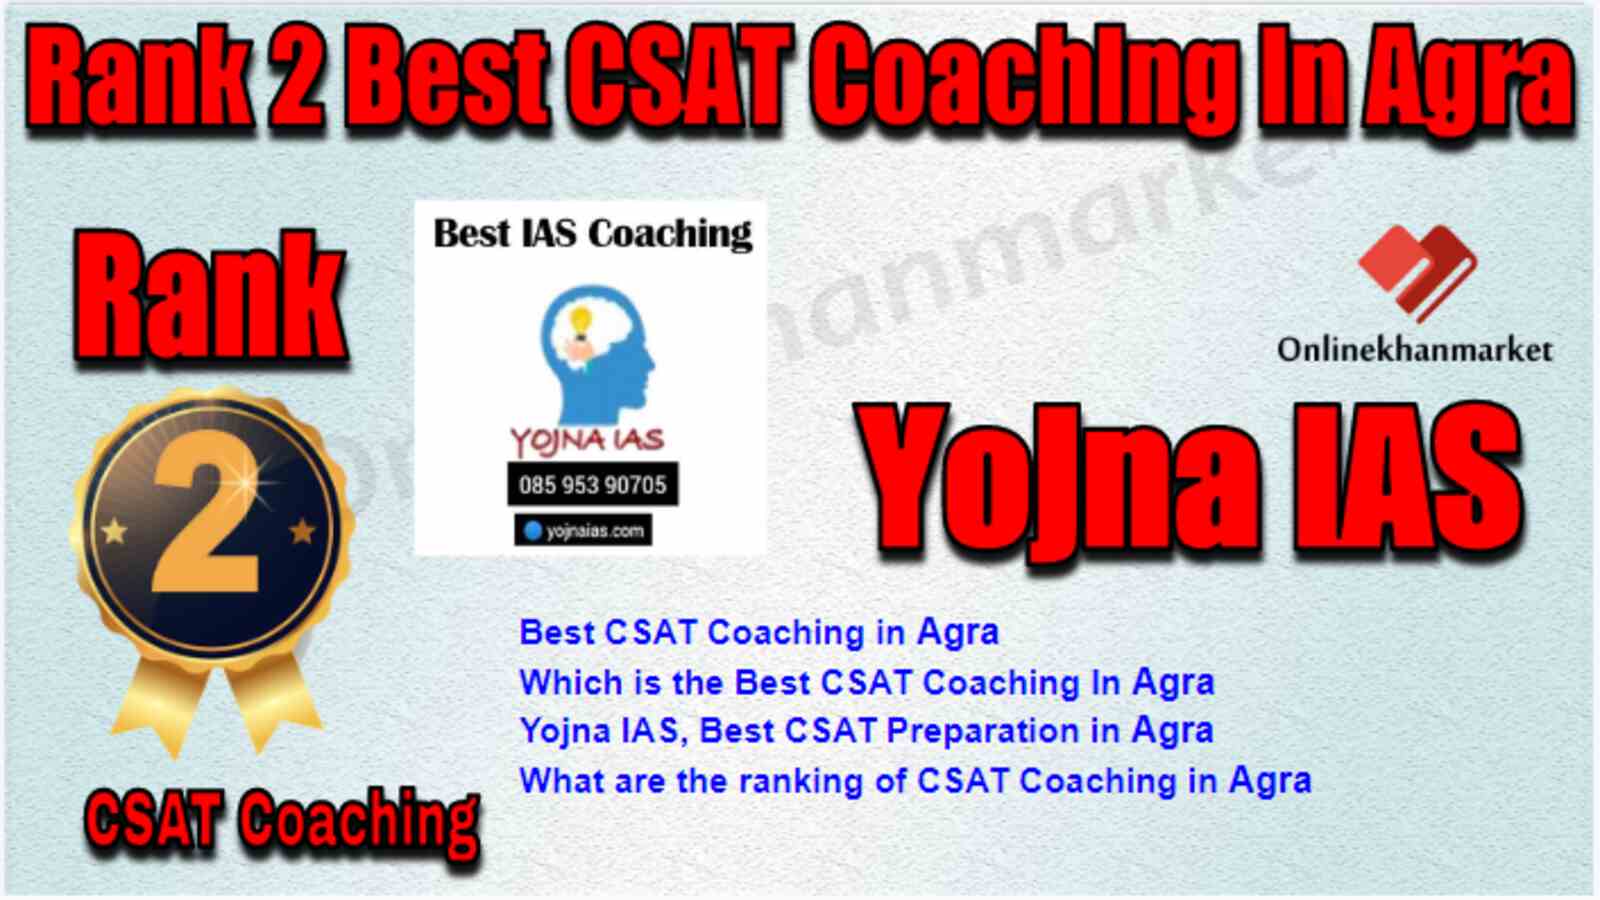 Rank 2 Best CSAT Coaching in Agra